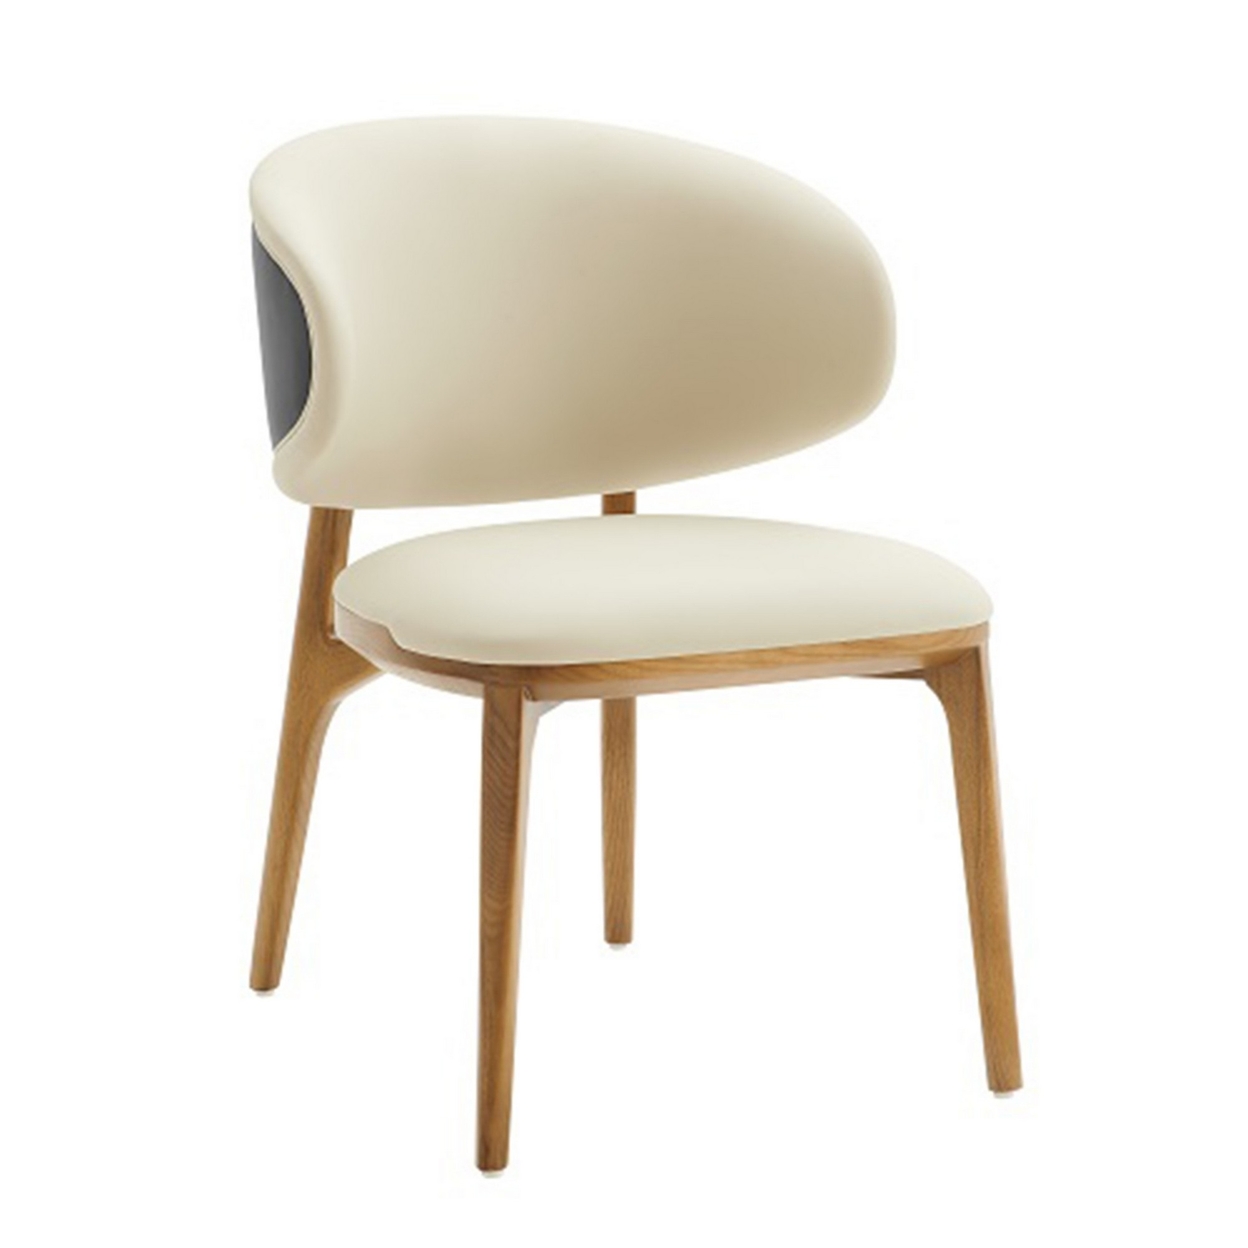 Cid 22 Inch Dining Chair, Curved Backrest, Vegan Faux Leather, Cream Fabric- Saltoro Sherpi